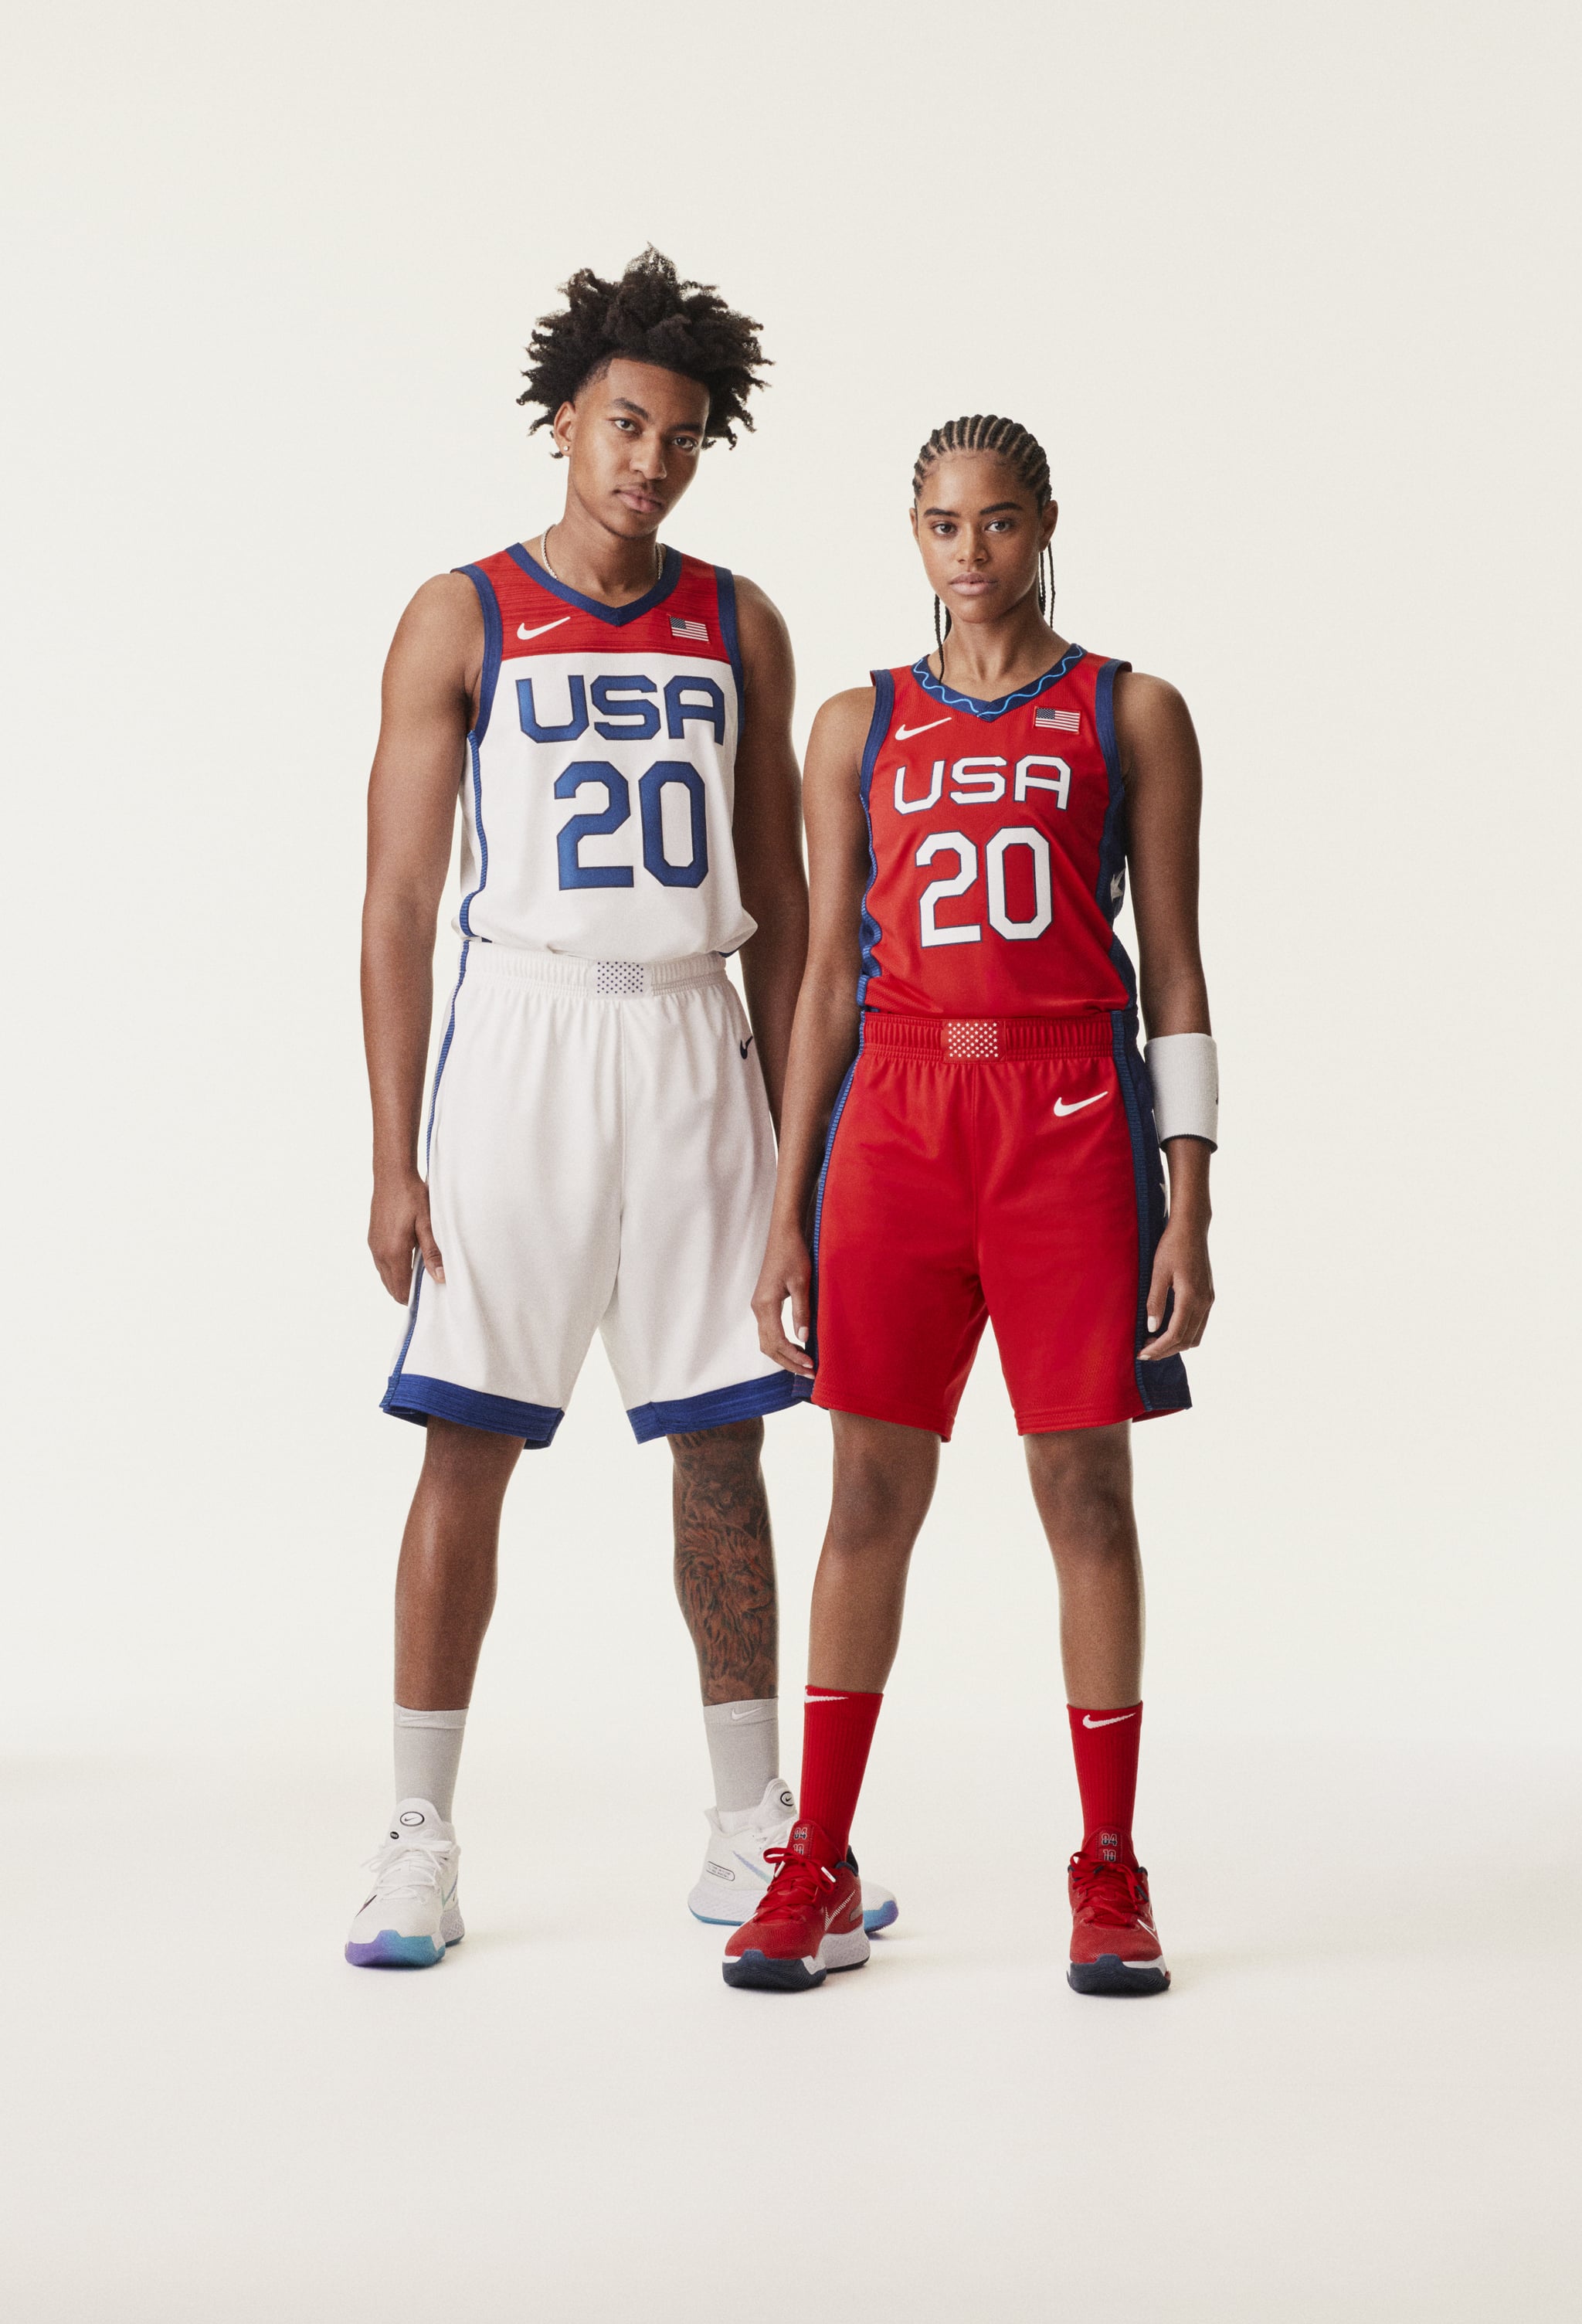 Team USA's 2021 Olympic Uniforms 